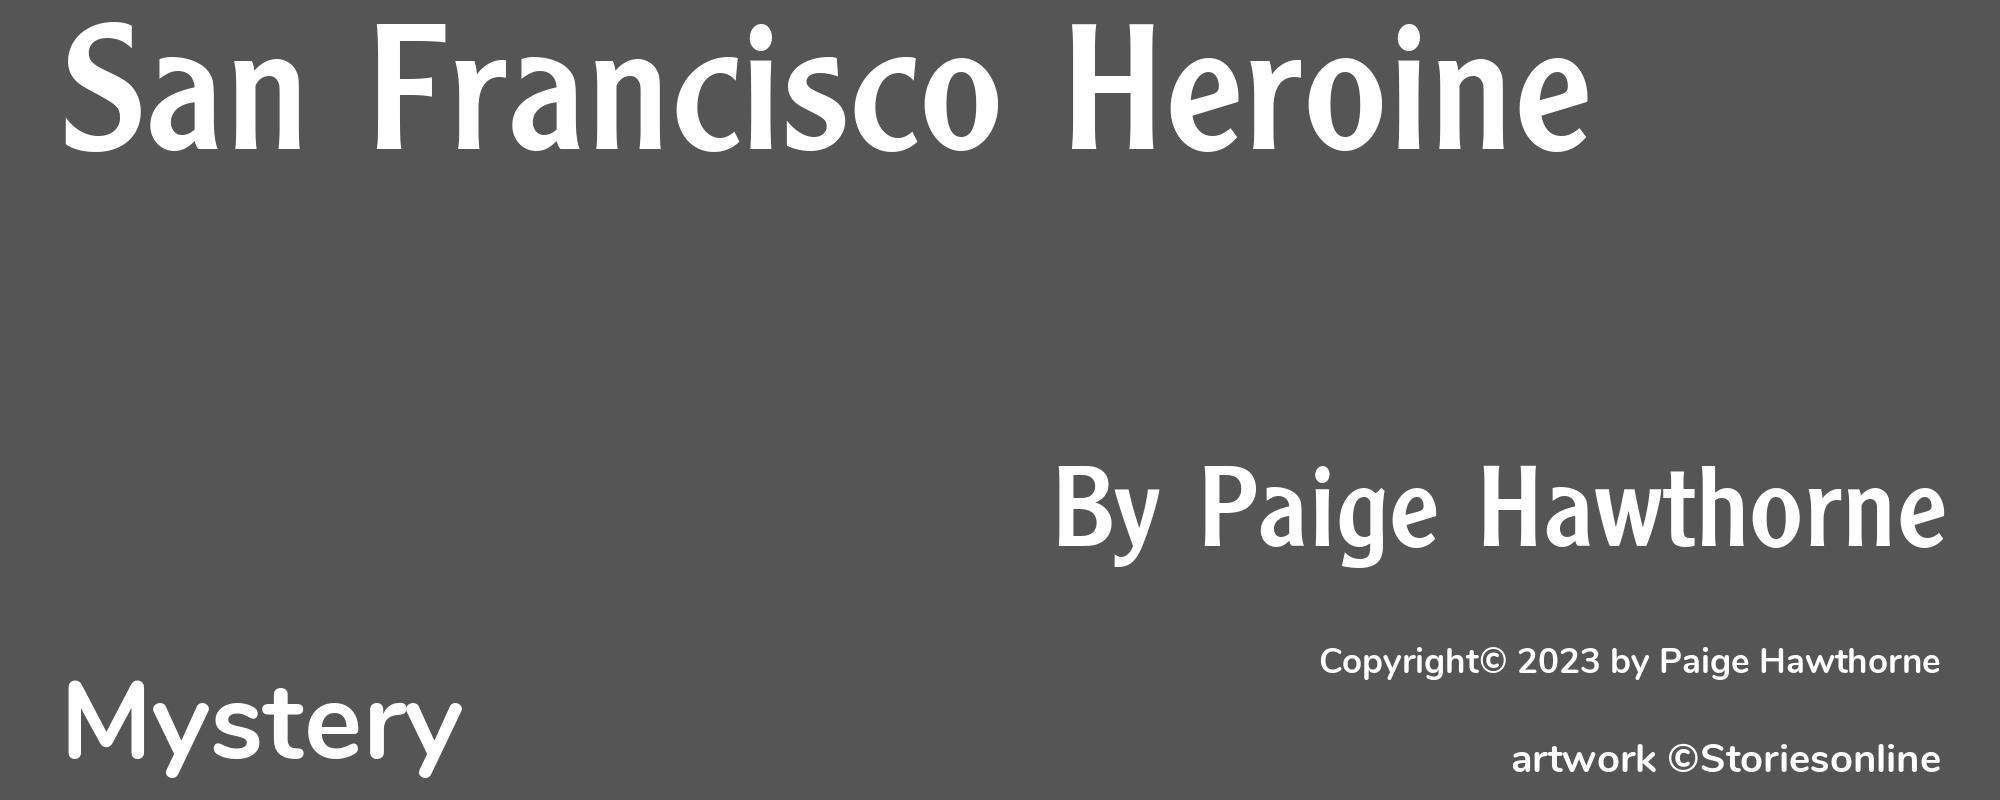 San Francisco Heroine - Cover